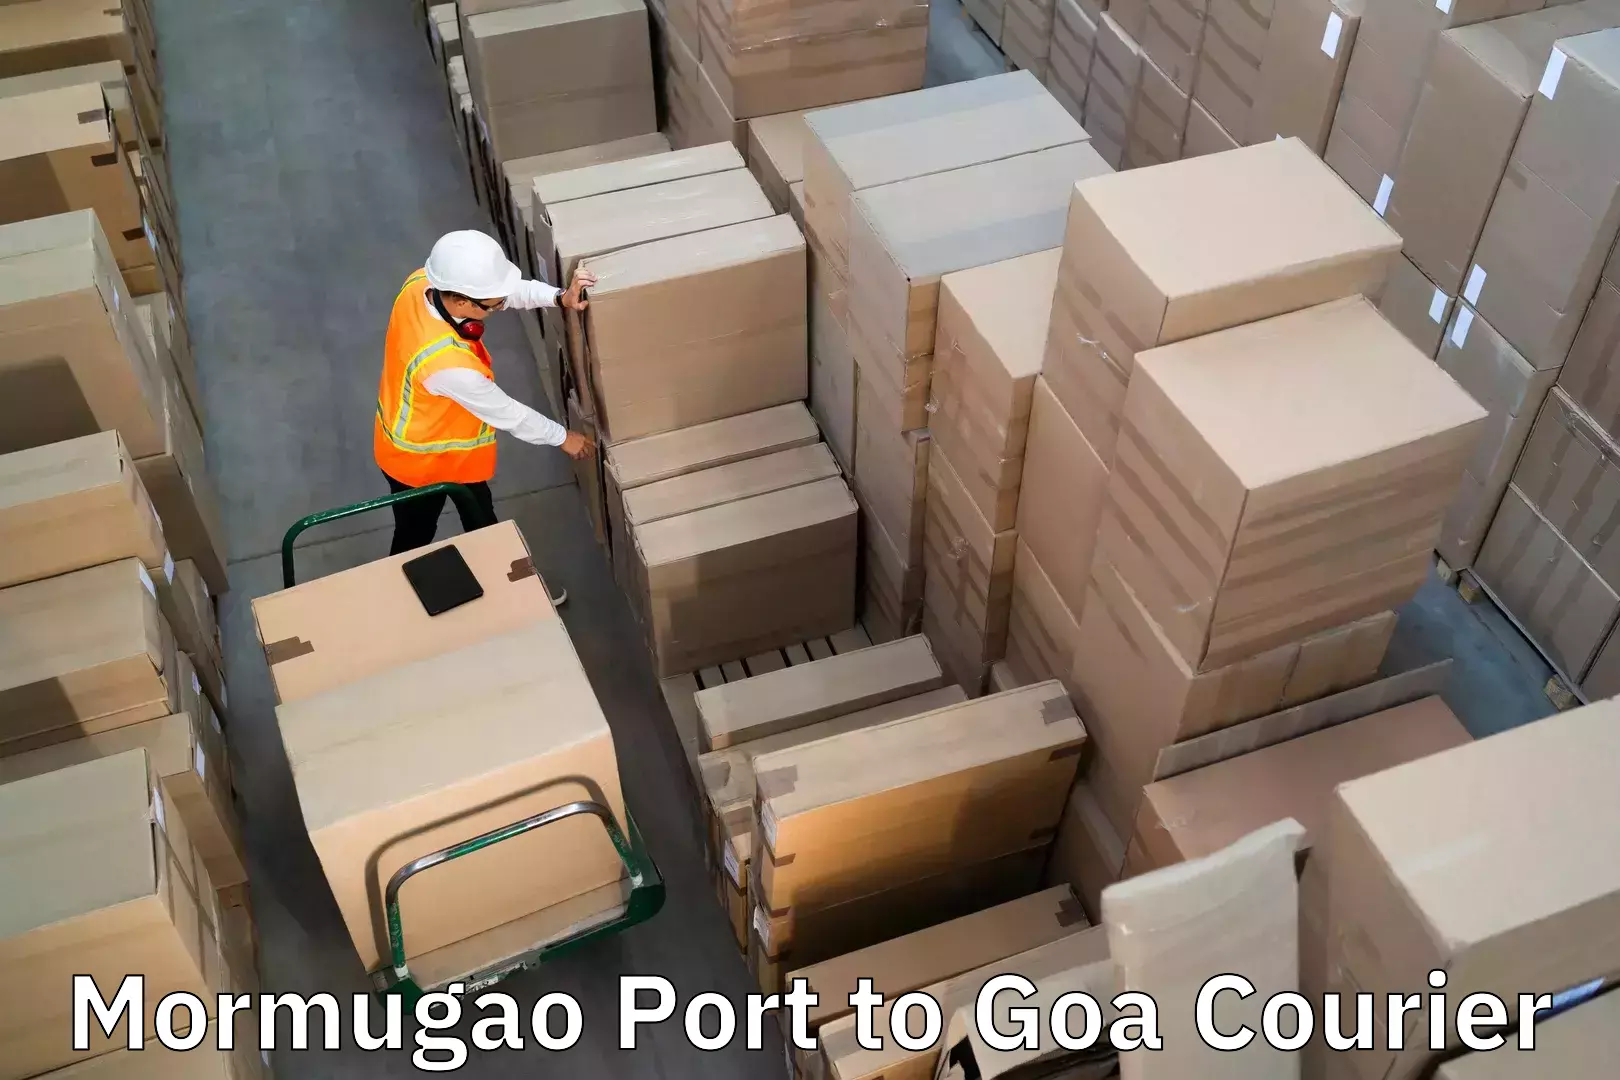 Instant baggage transport quote Mormugao Port to Panjim